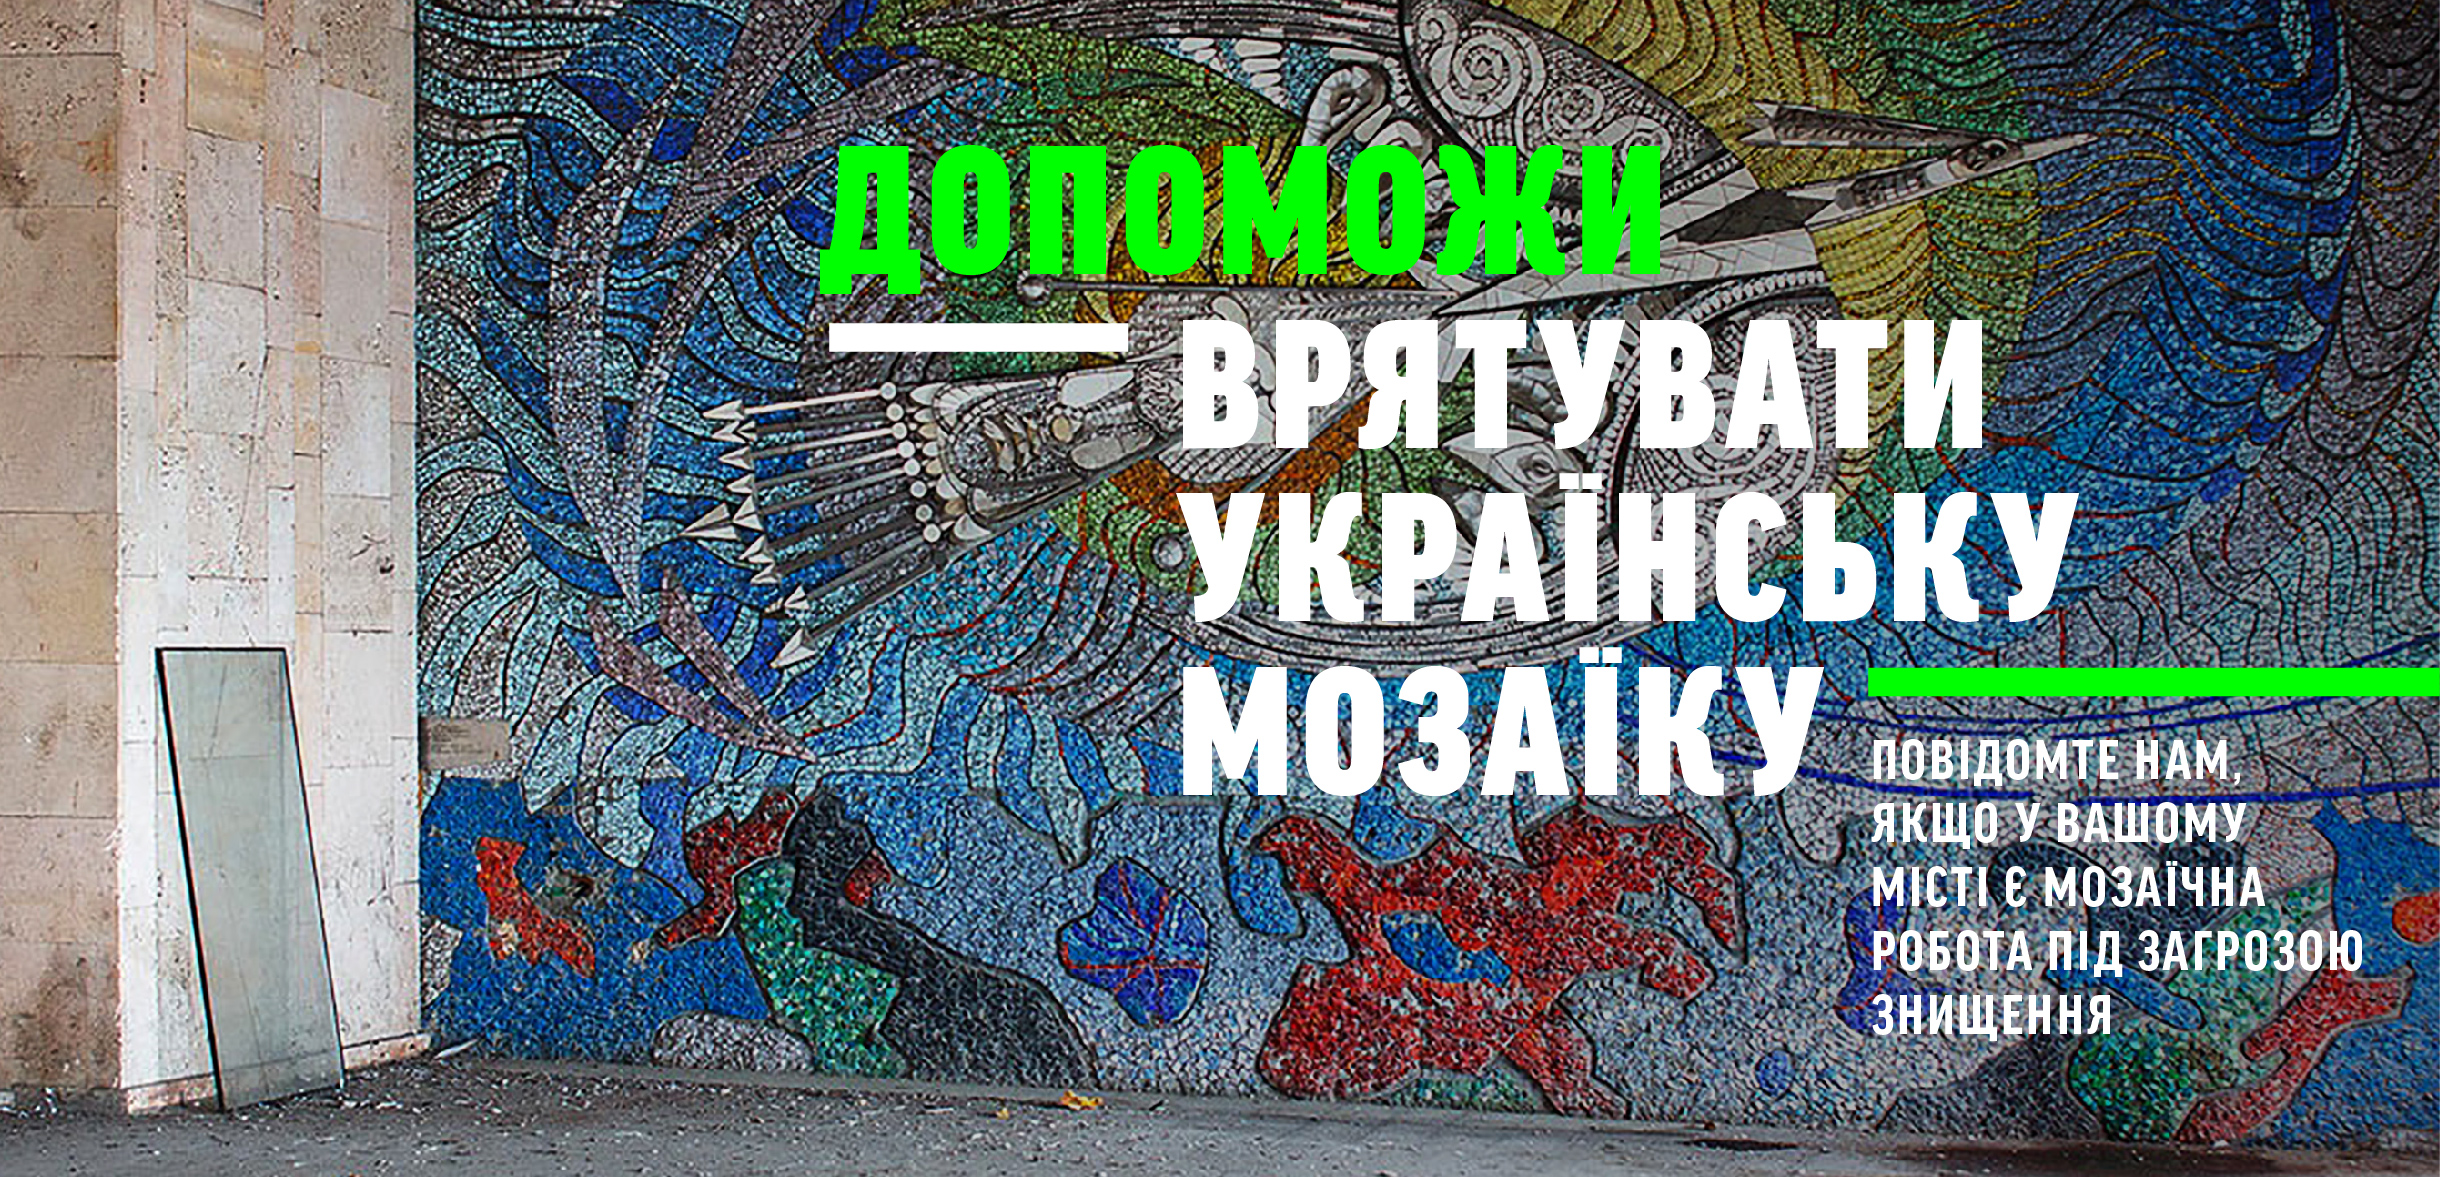 HELP US SAVE UKRAINIAN MOSAICS